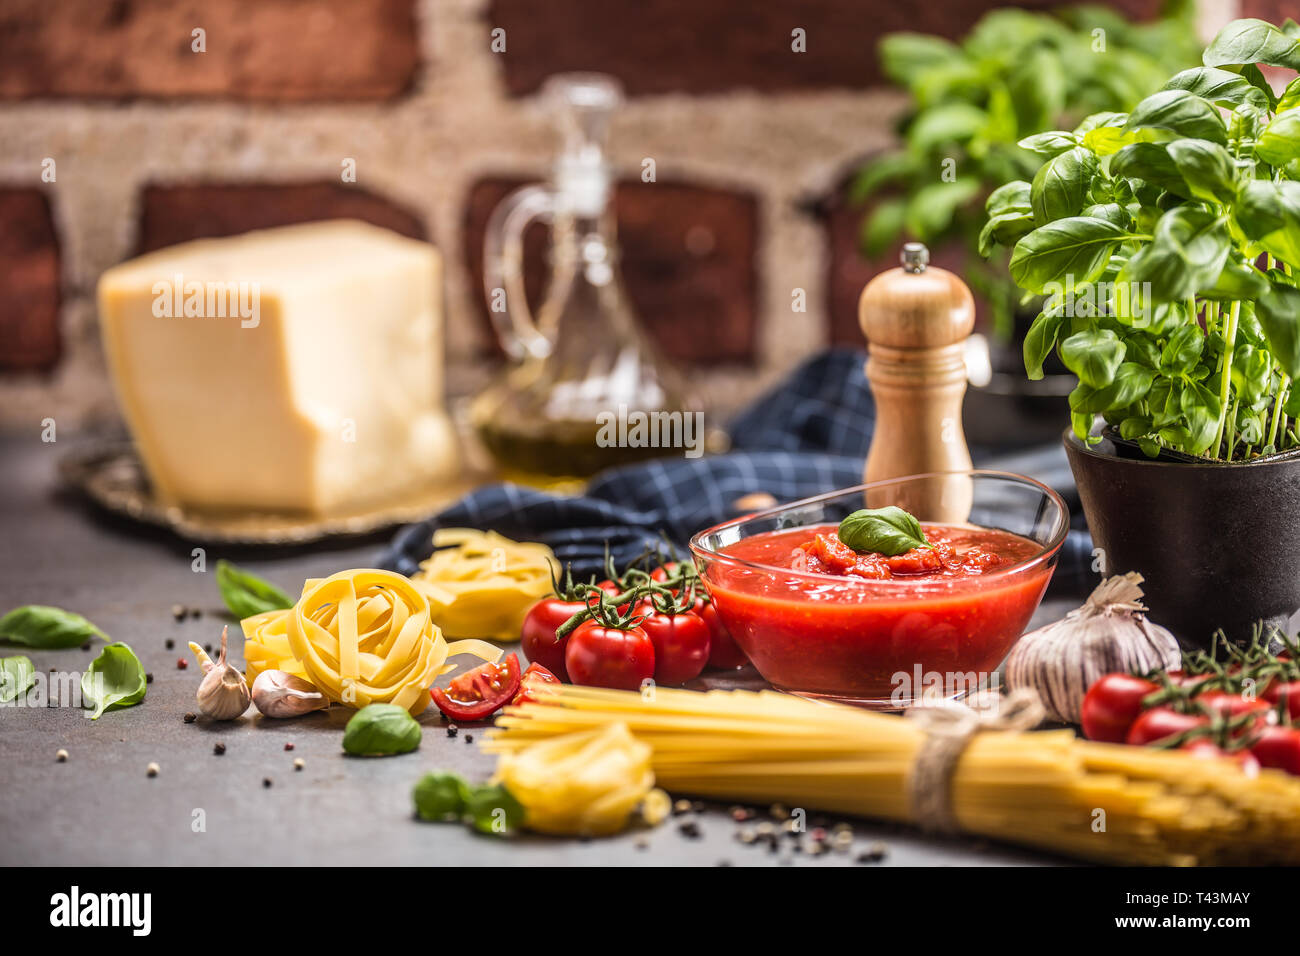 Tomato sauce tomatoes basil pasta spaghetti olive oil and parmesan. Stock Photo